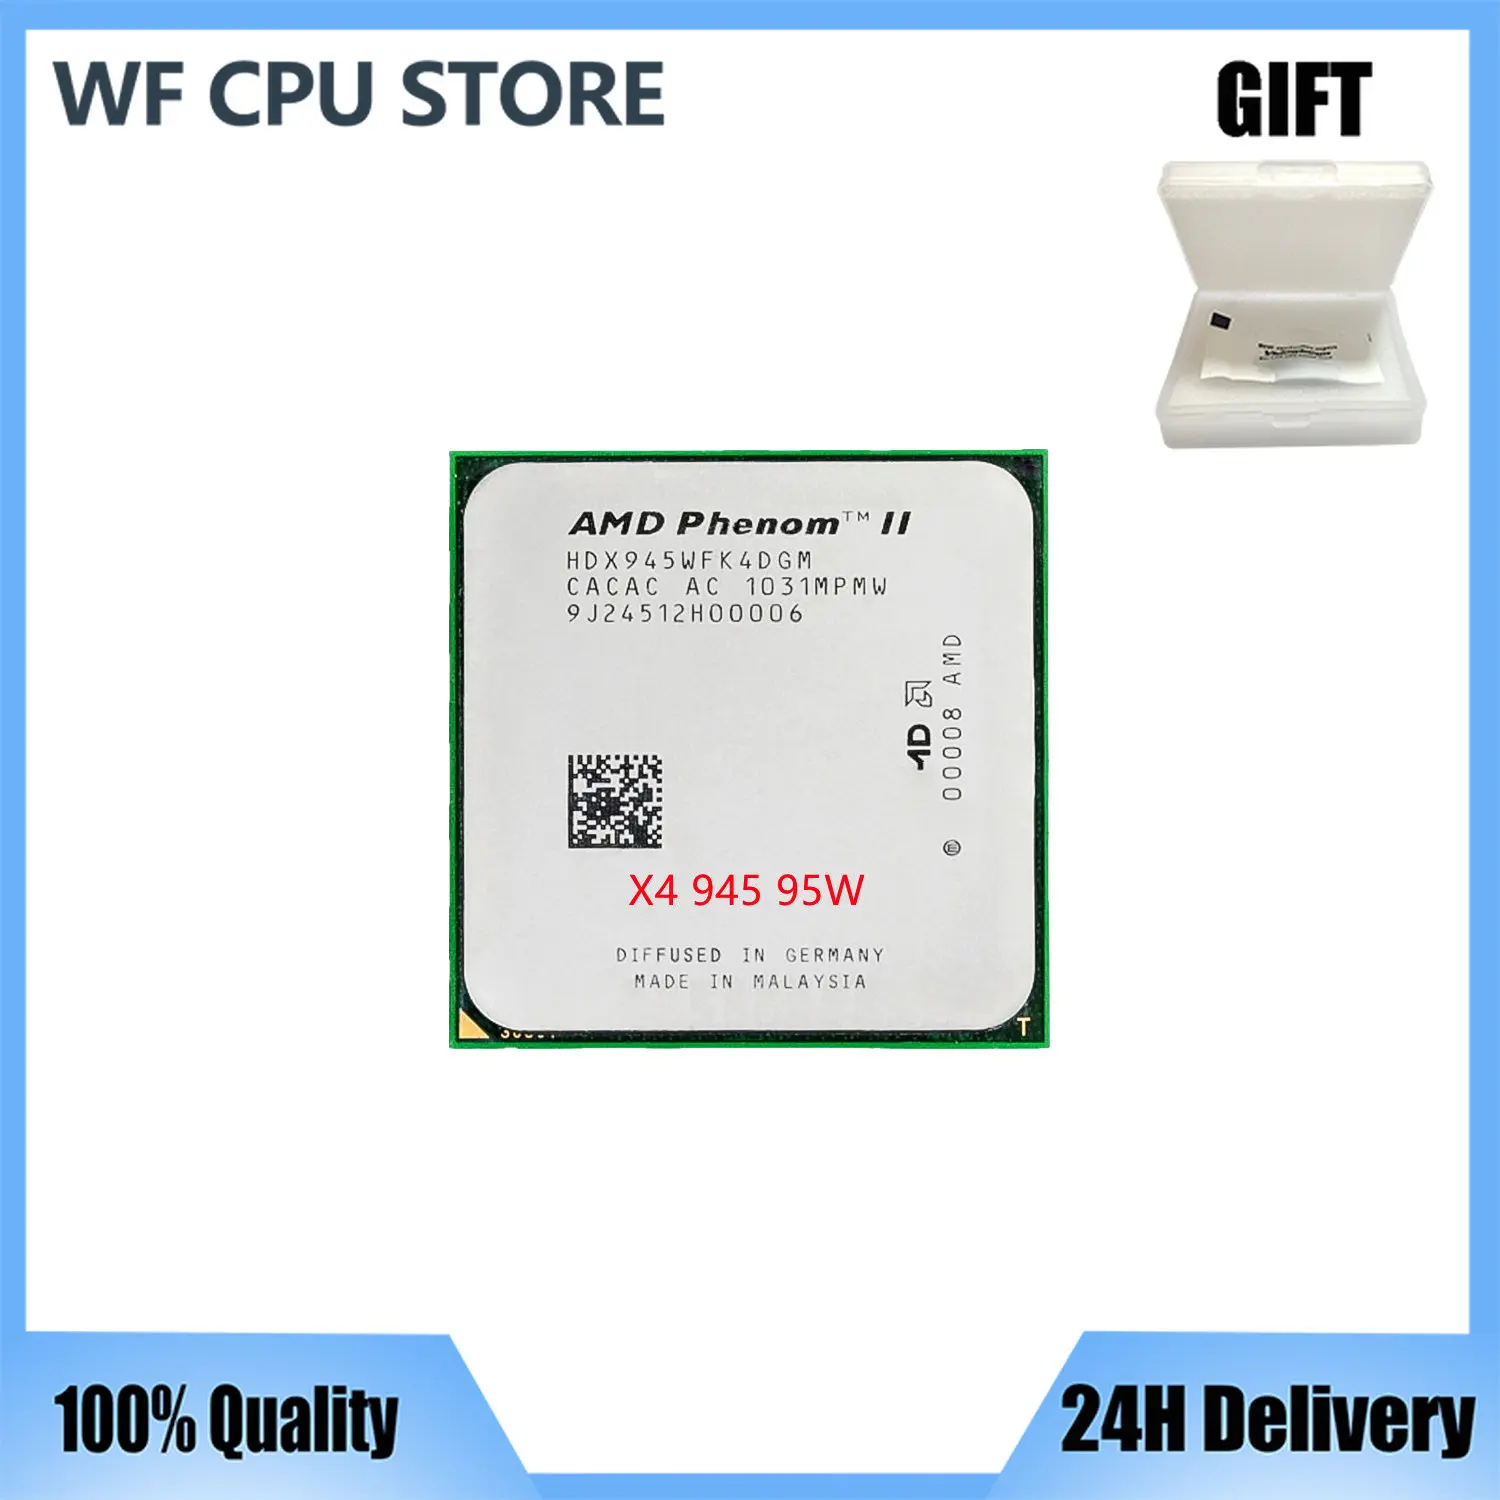 AMD Phenom II X4 945 95W 3.0GHz Quad-Core CPU Processor